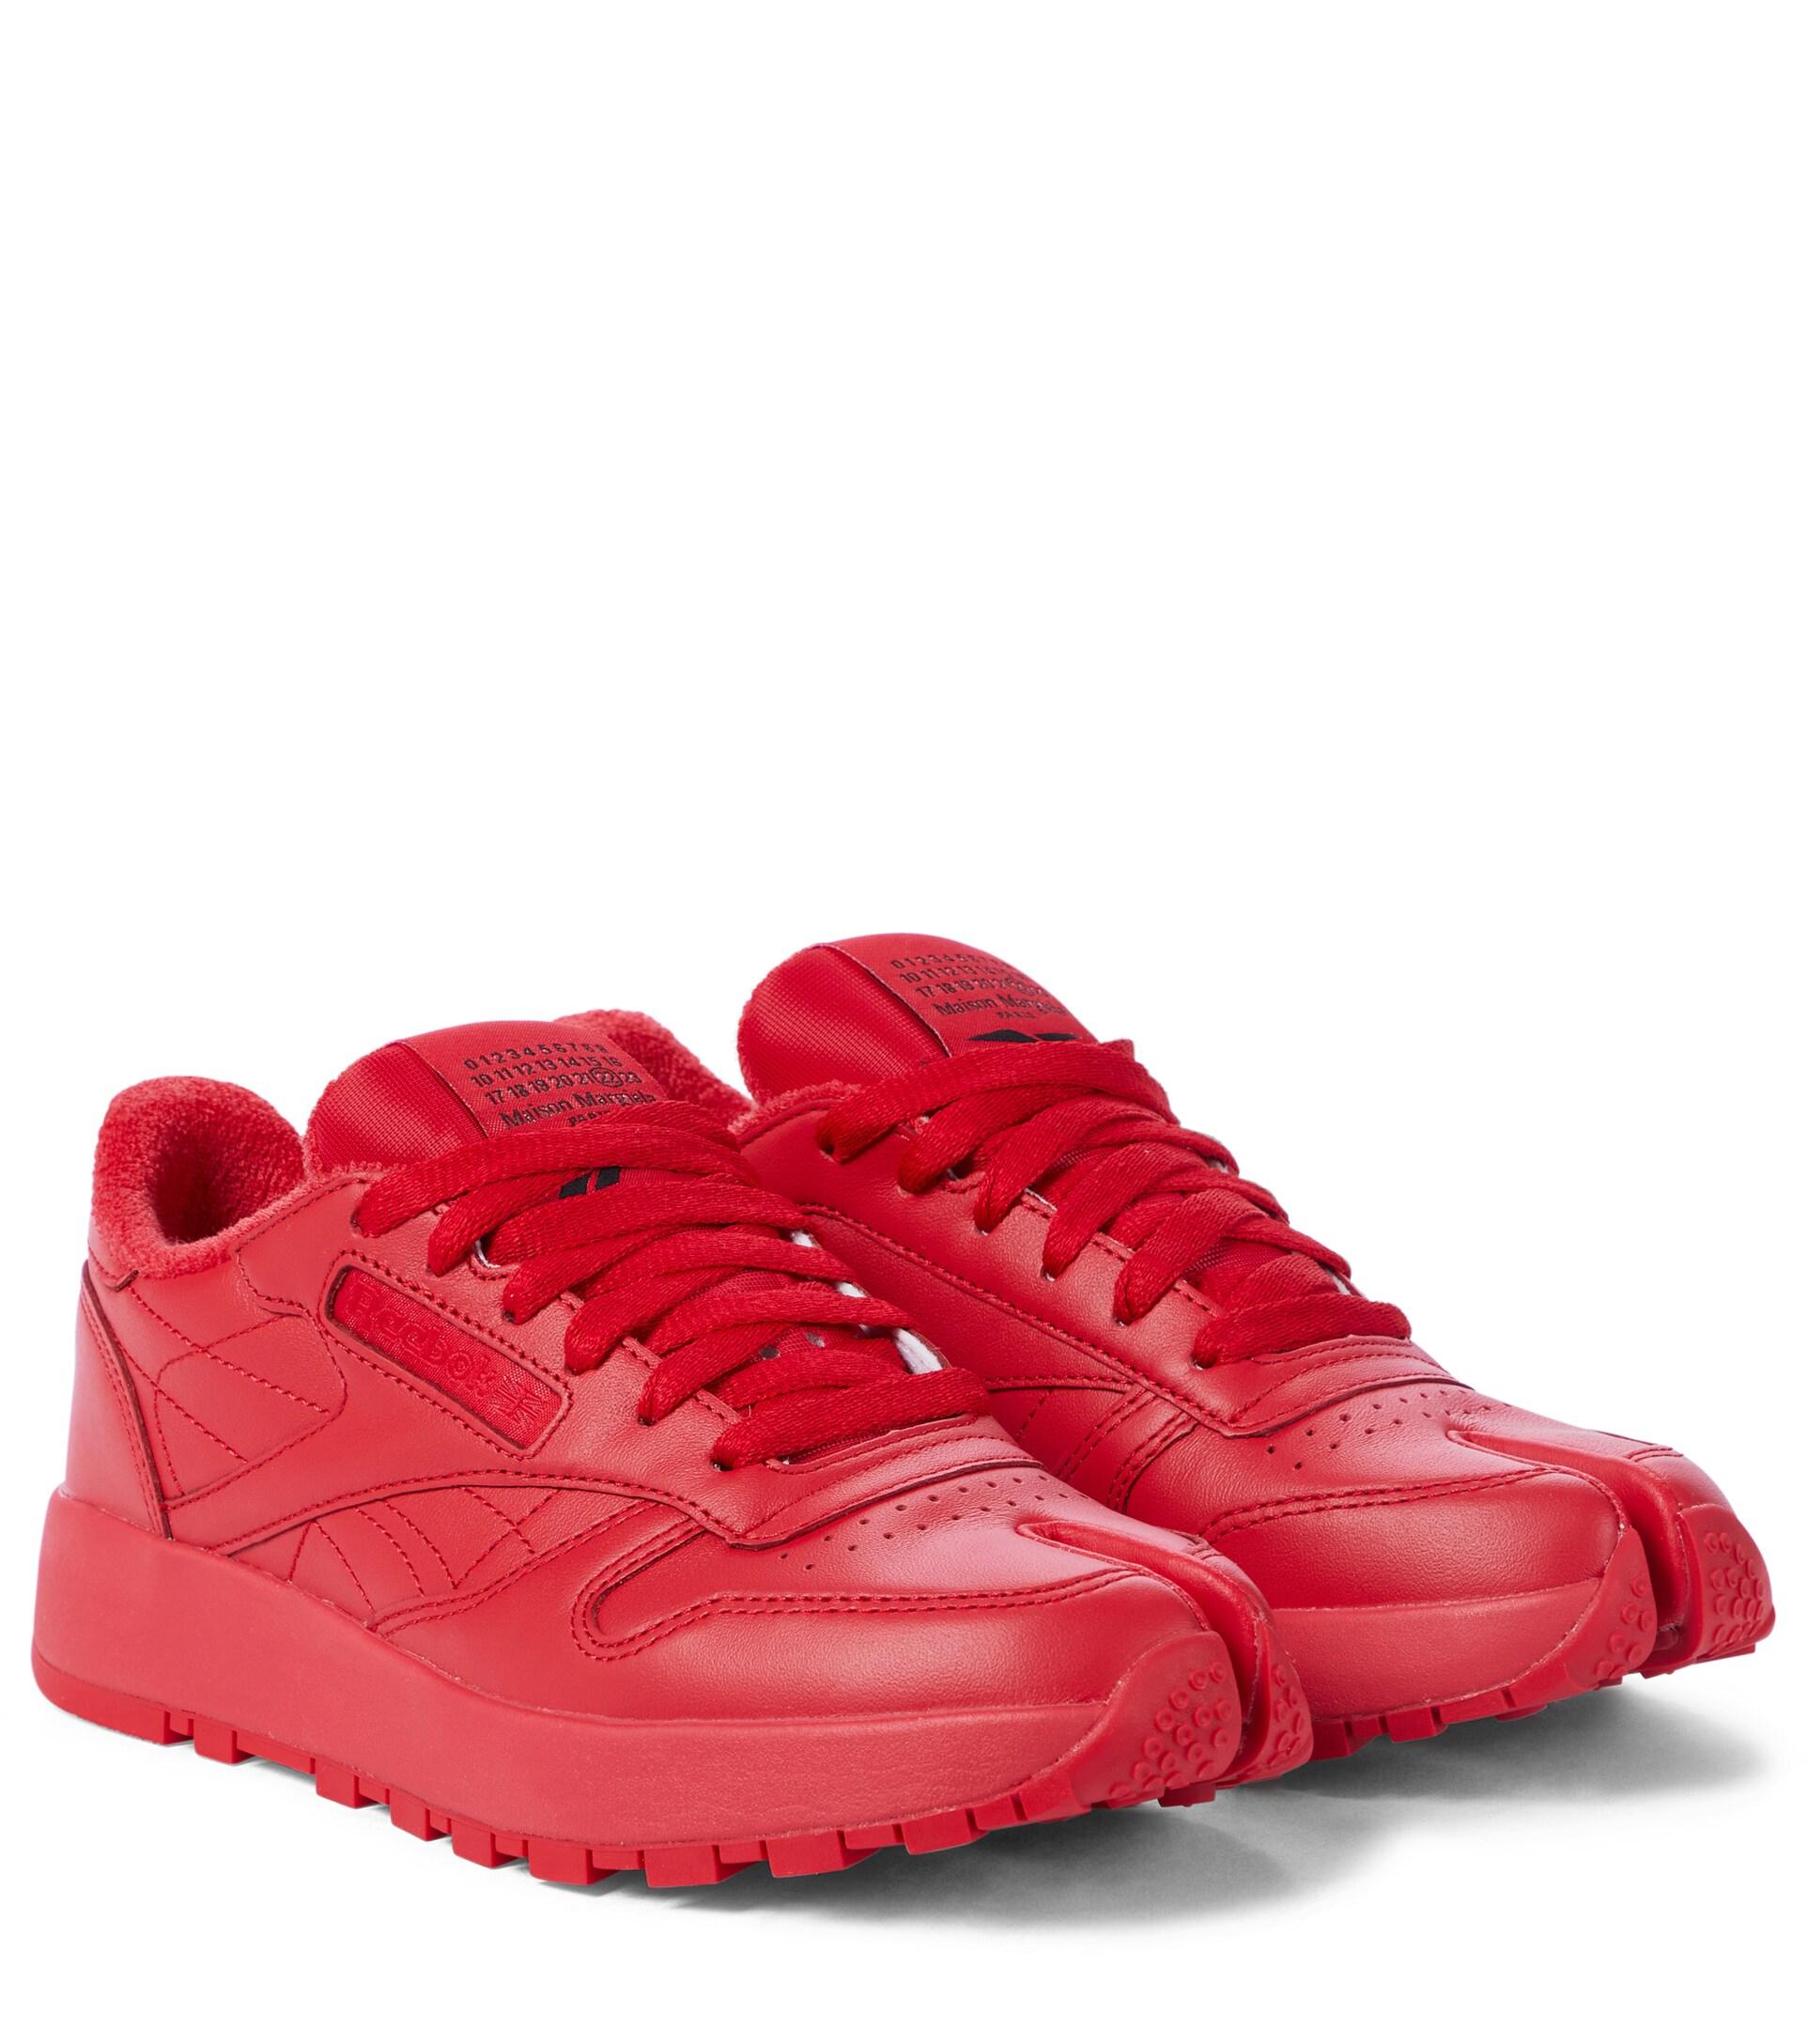 Maison Margiela X Reebok Classic Tabi Leather Sneakers in Red 